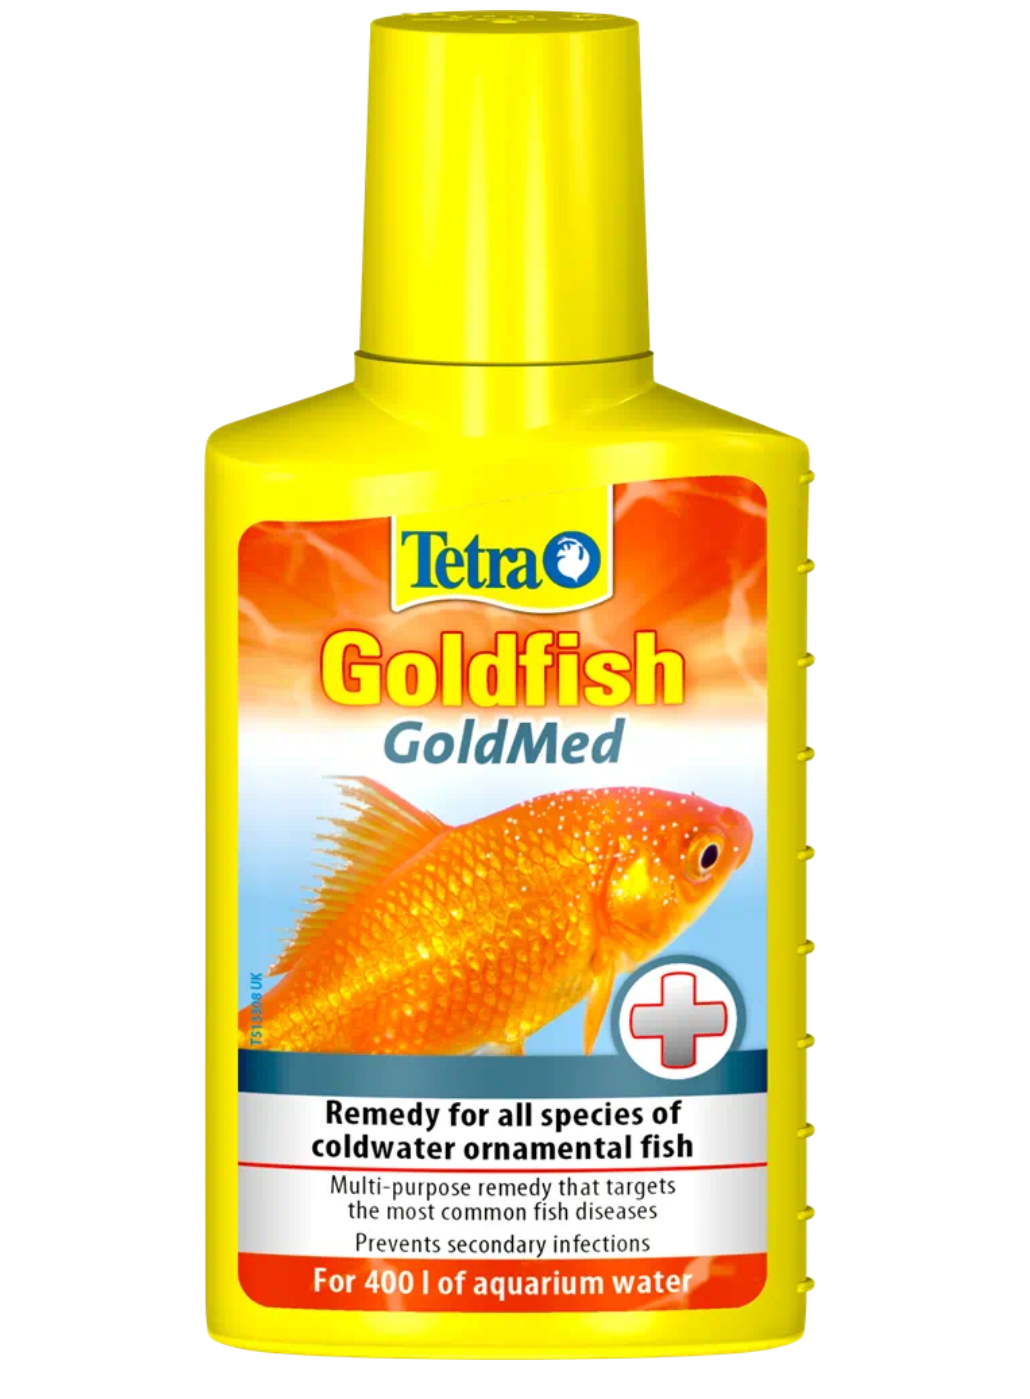 Tetra Goldfish GoldMed 100ml - Treats 400l